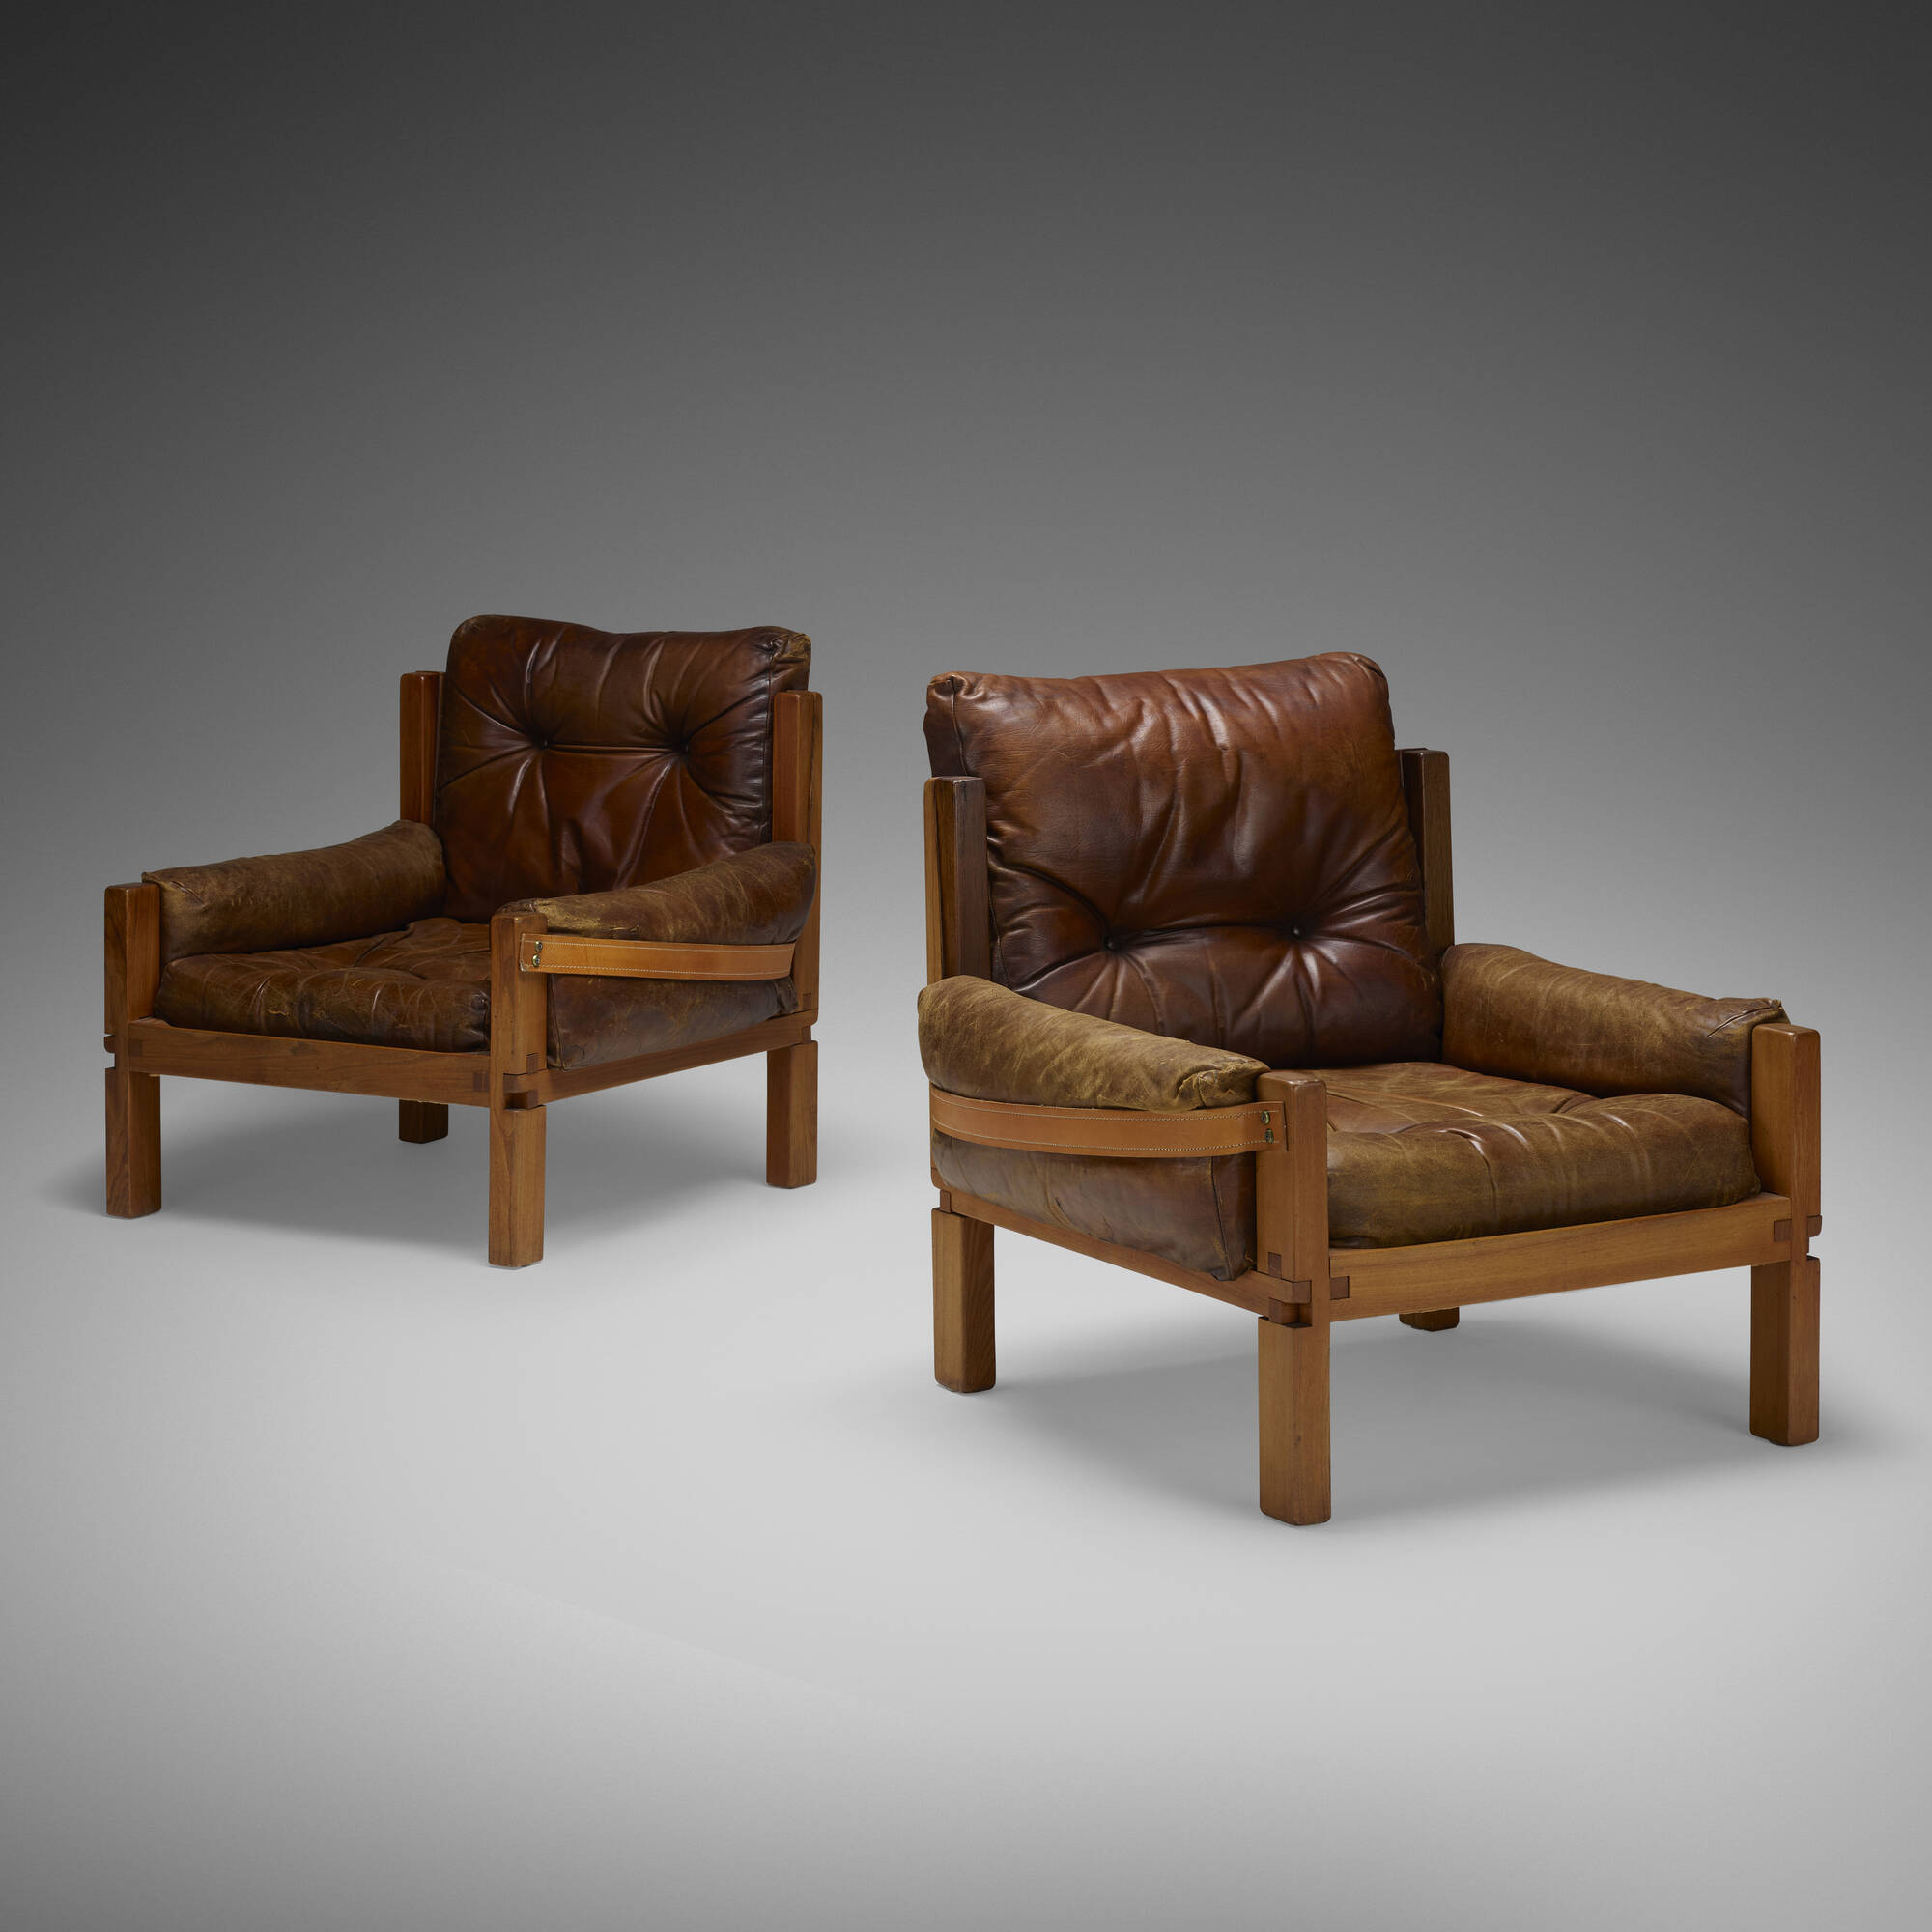 157: PIERRE CHAPO, S15 lounge chairs, pair < Design, 17 December 